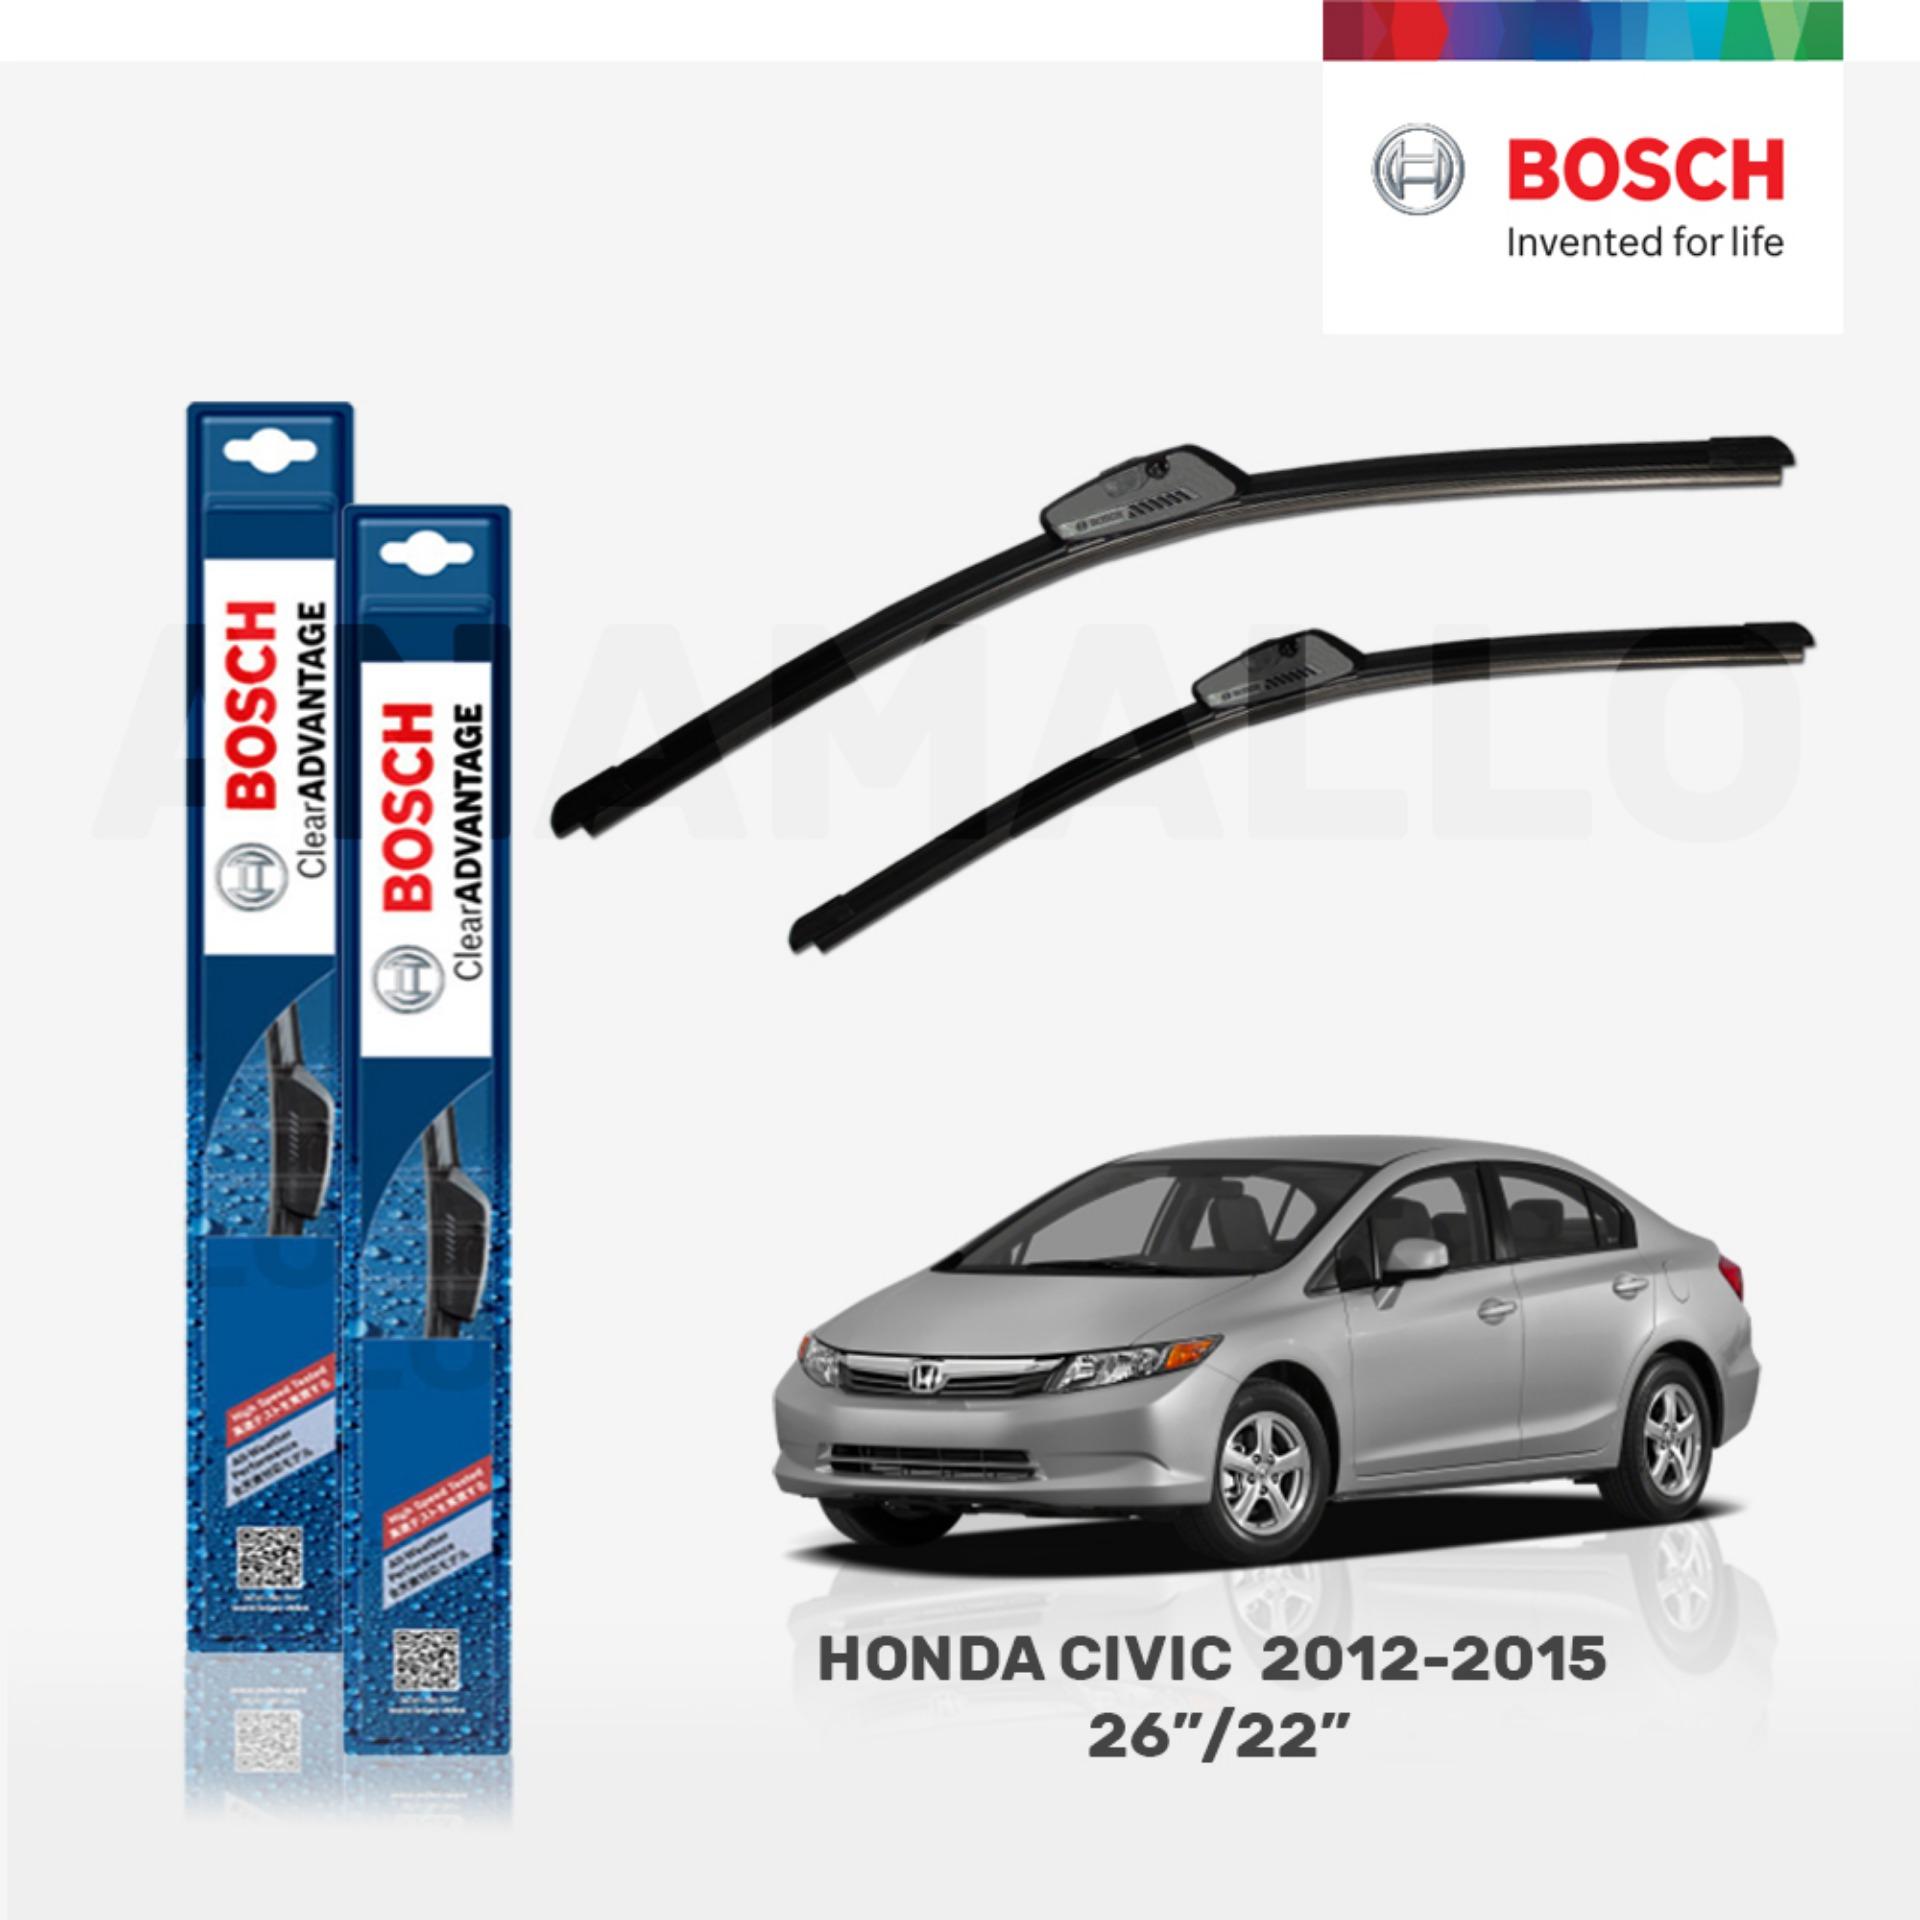 2016 Honda Civic Wiper Blade Size - Latest Cars 2016 Honda Civic Lx Wiper Blade Size